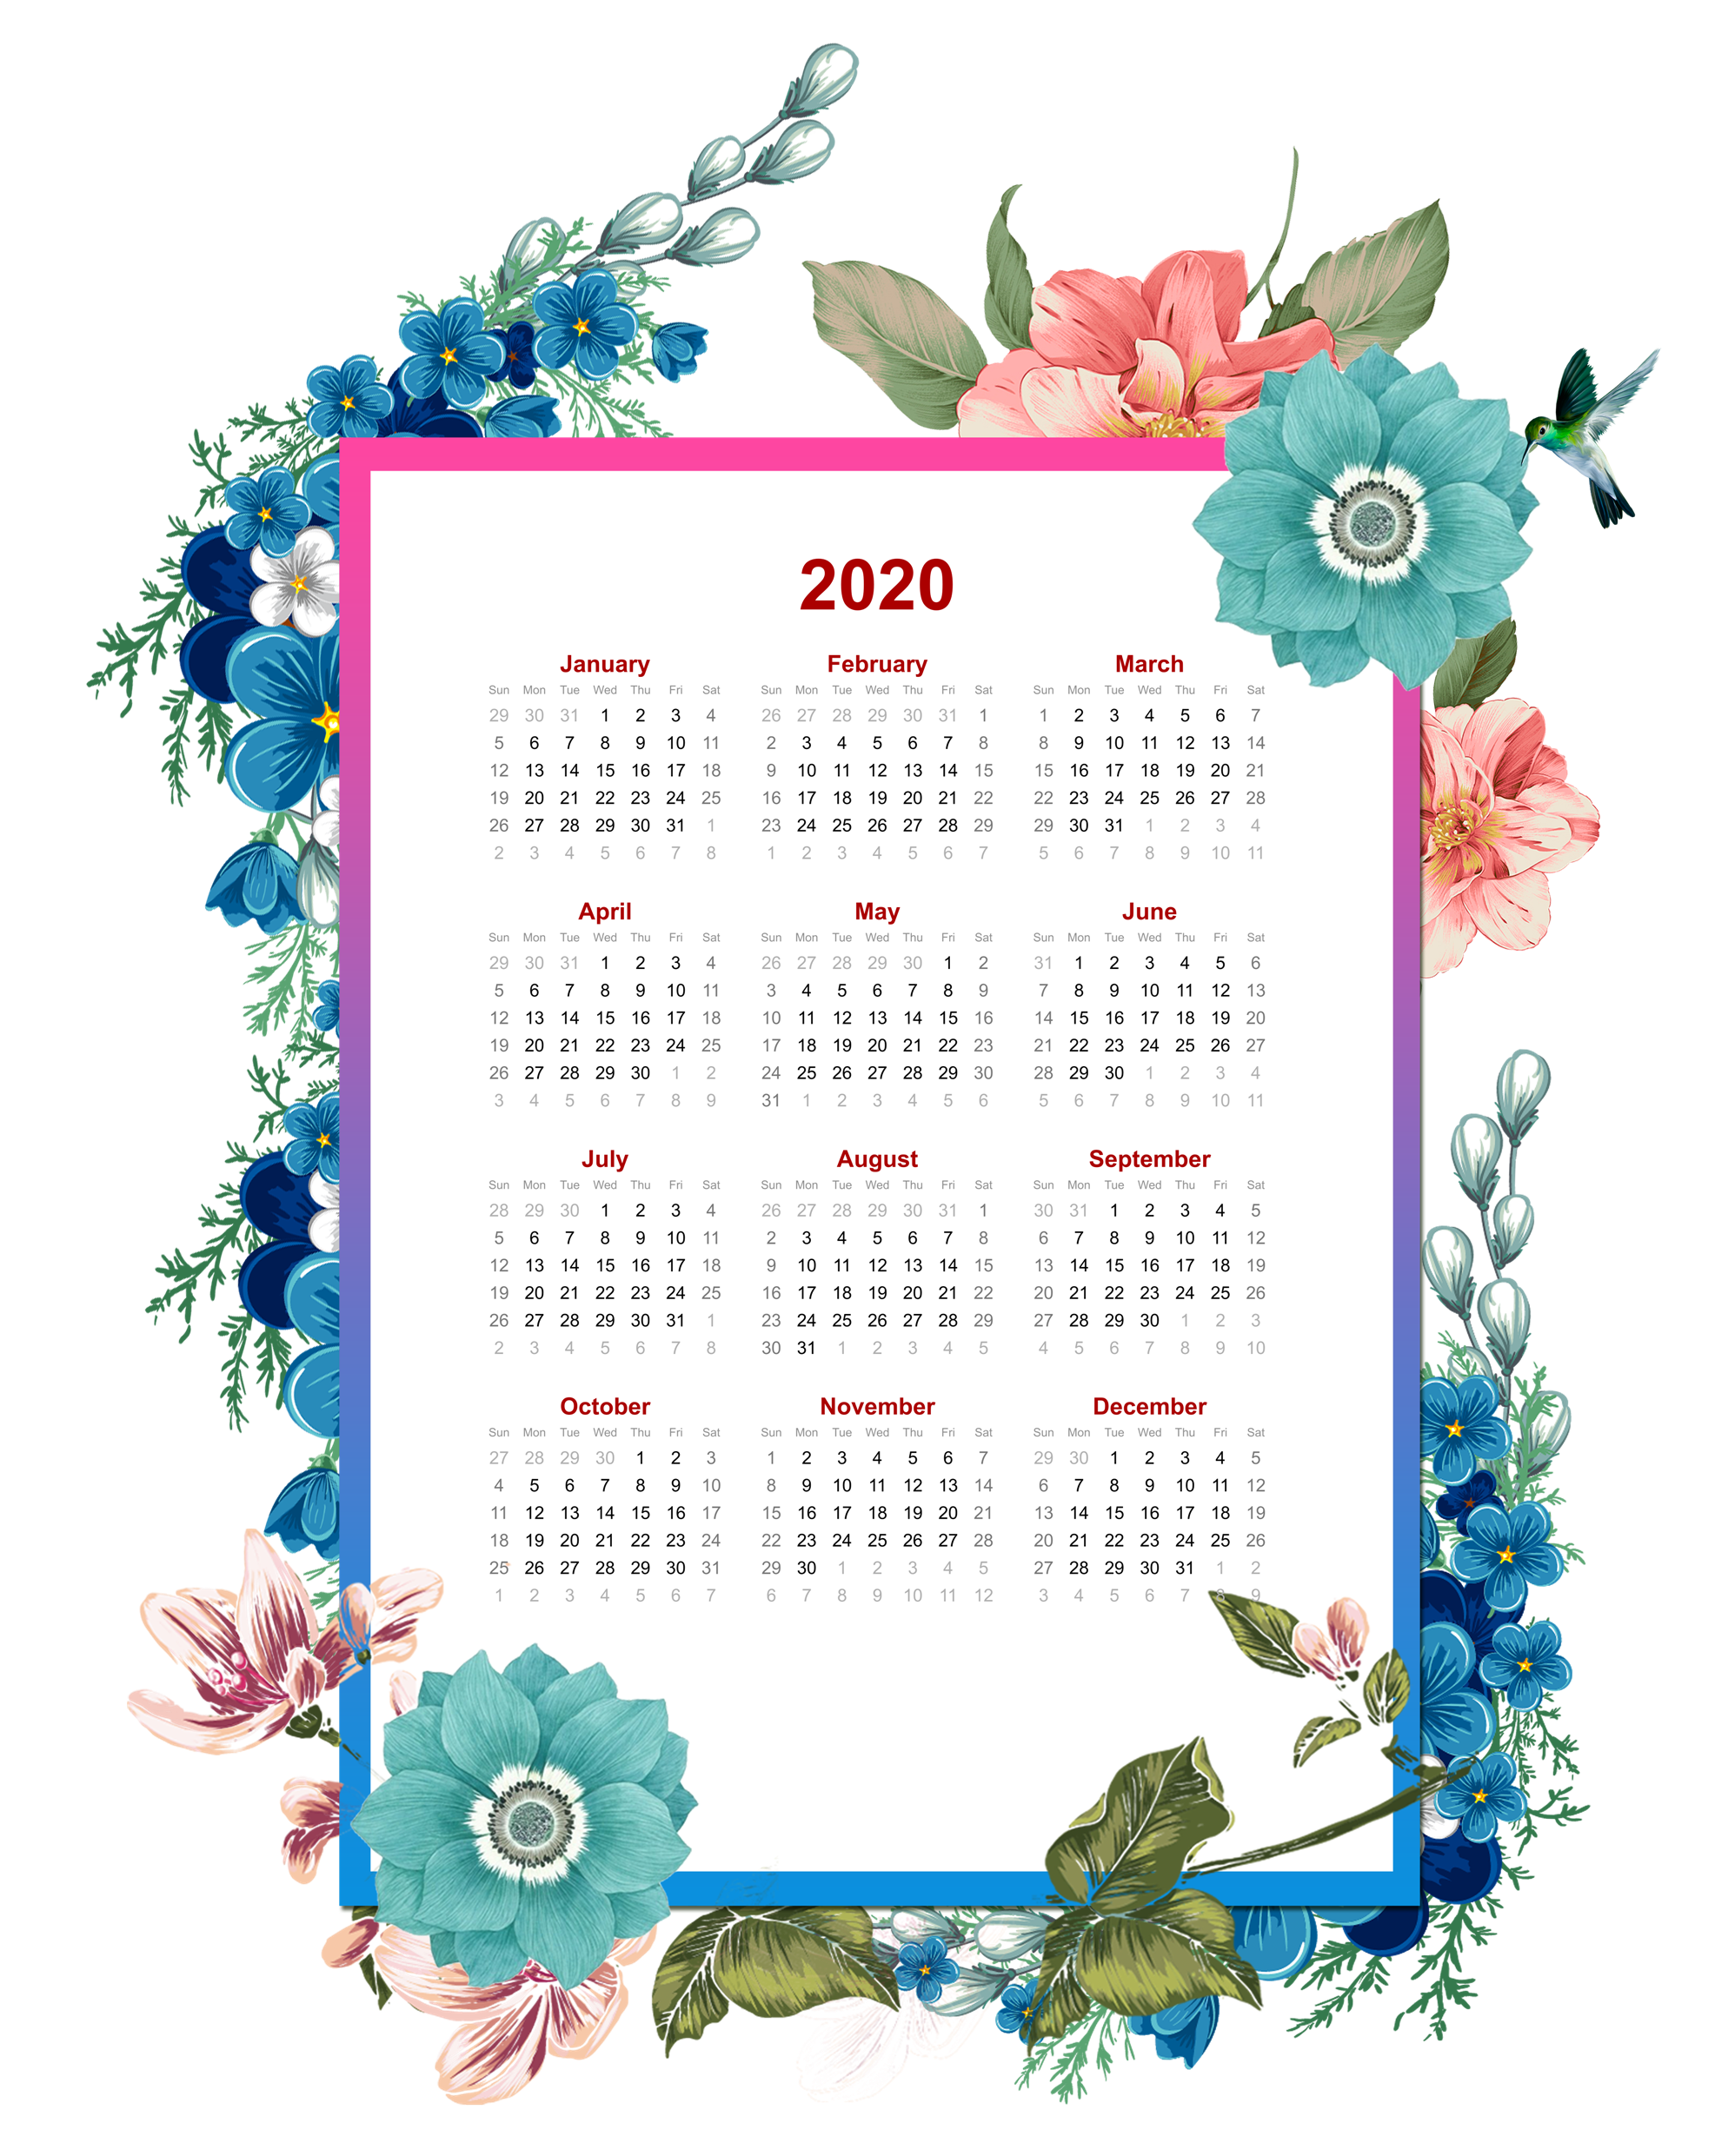 Calendar 2020 Png Clipart Calendar Png Calendar Pictures Calendar 2020